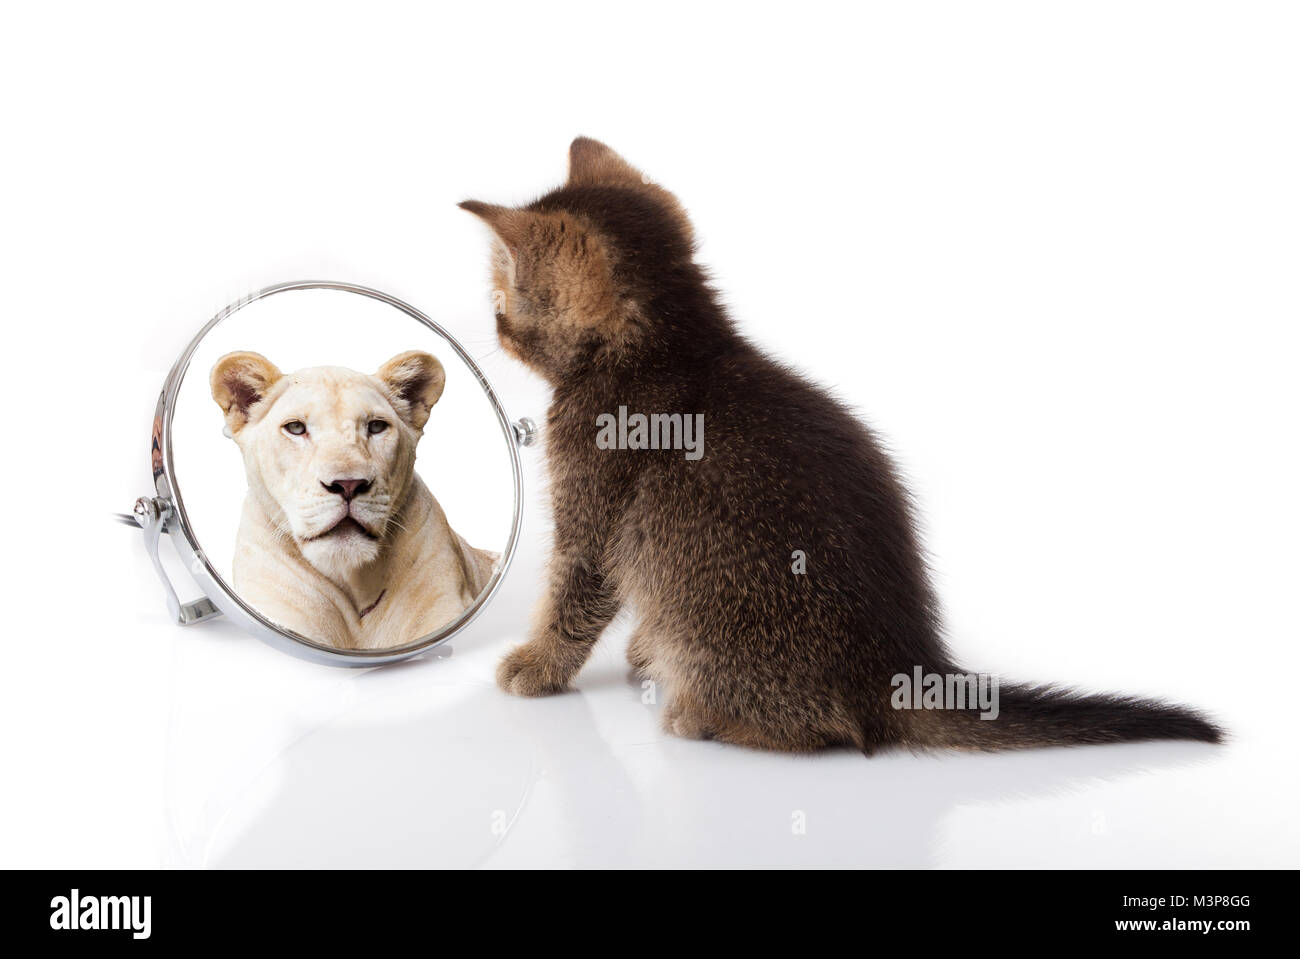 Chaton Avec Miroir Sur Fond Blanc Chaton Ressemble A Un Miroir Reflet D Un Lion Photo Stock Alamy